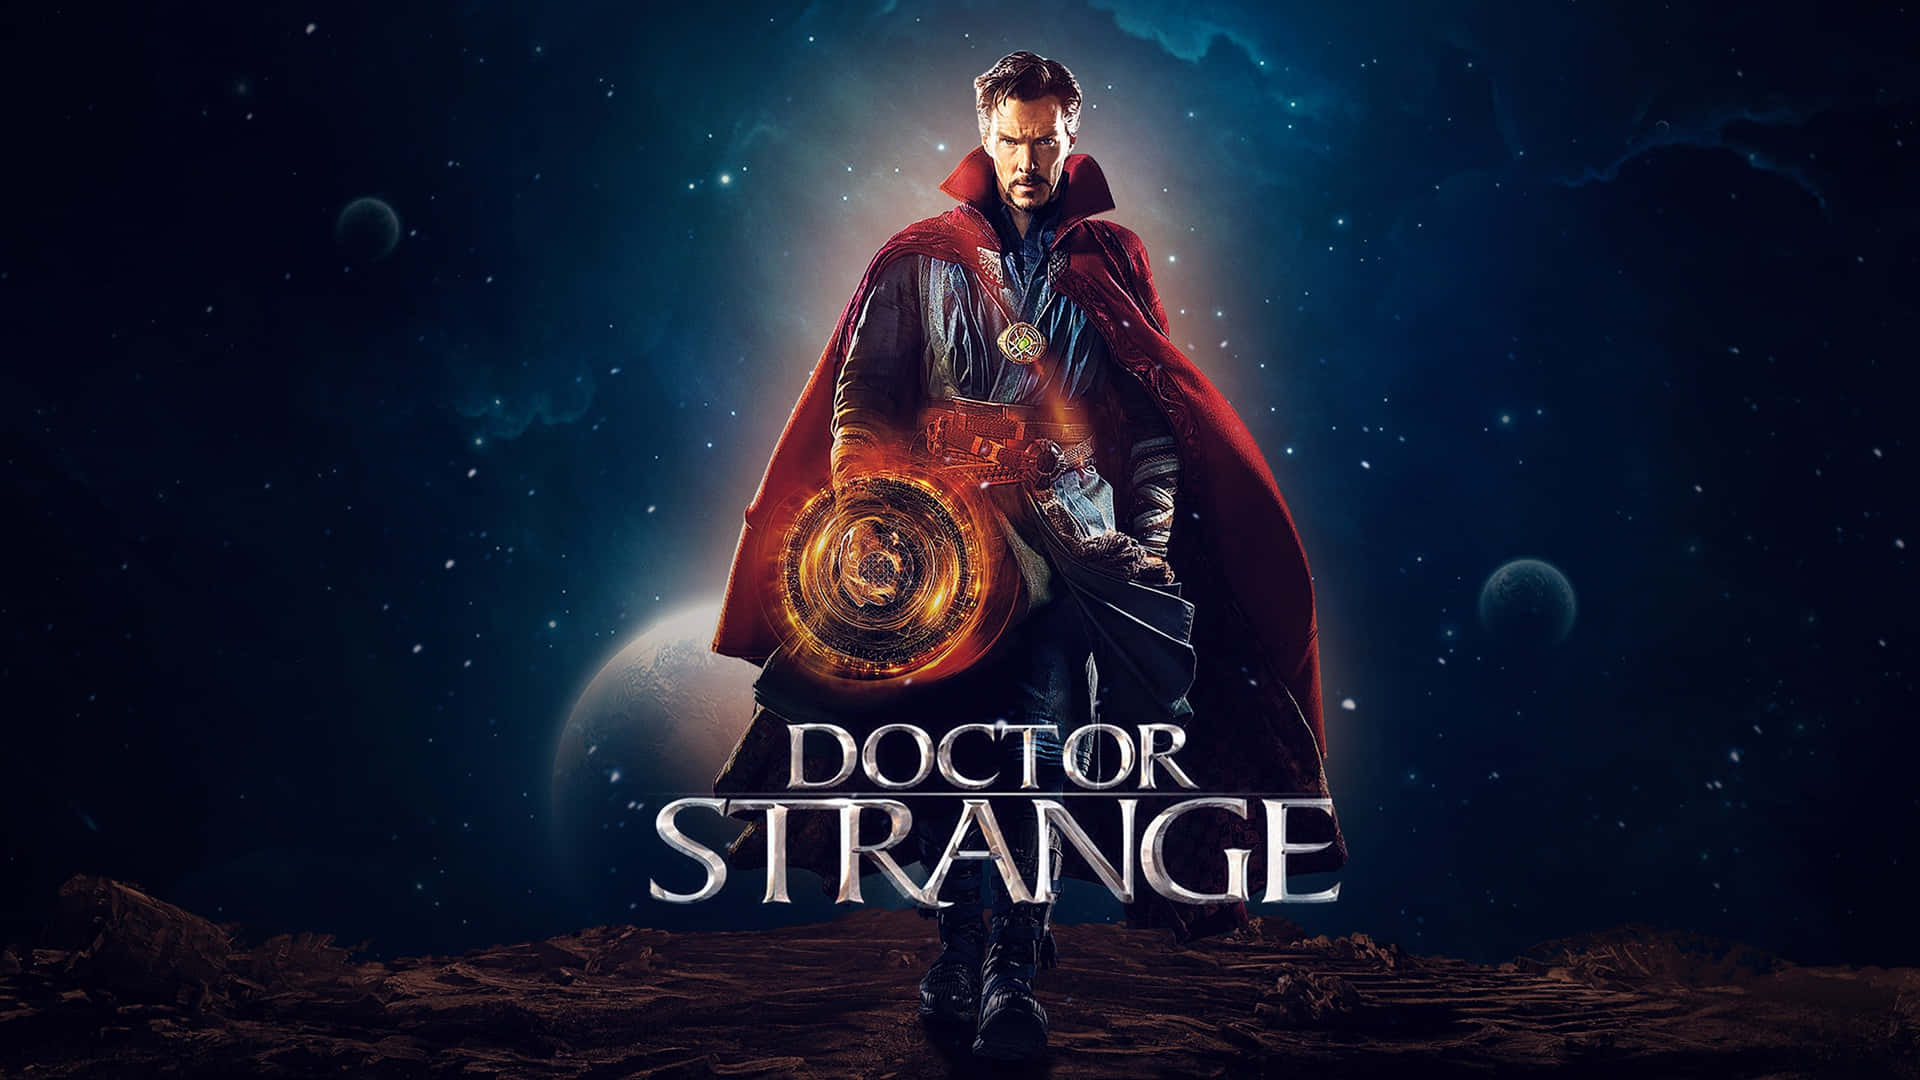 Mäktigetrollkarlen Doctor Strange